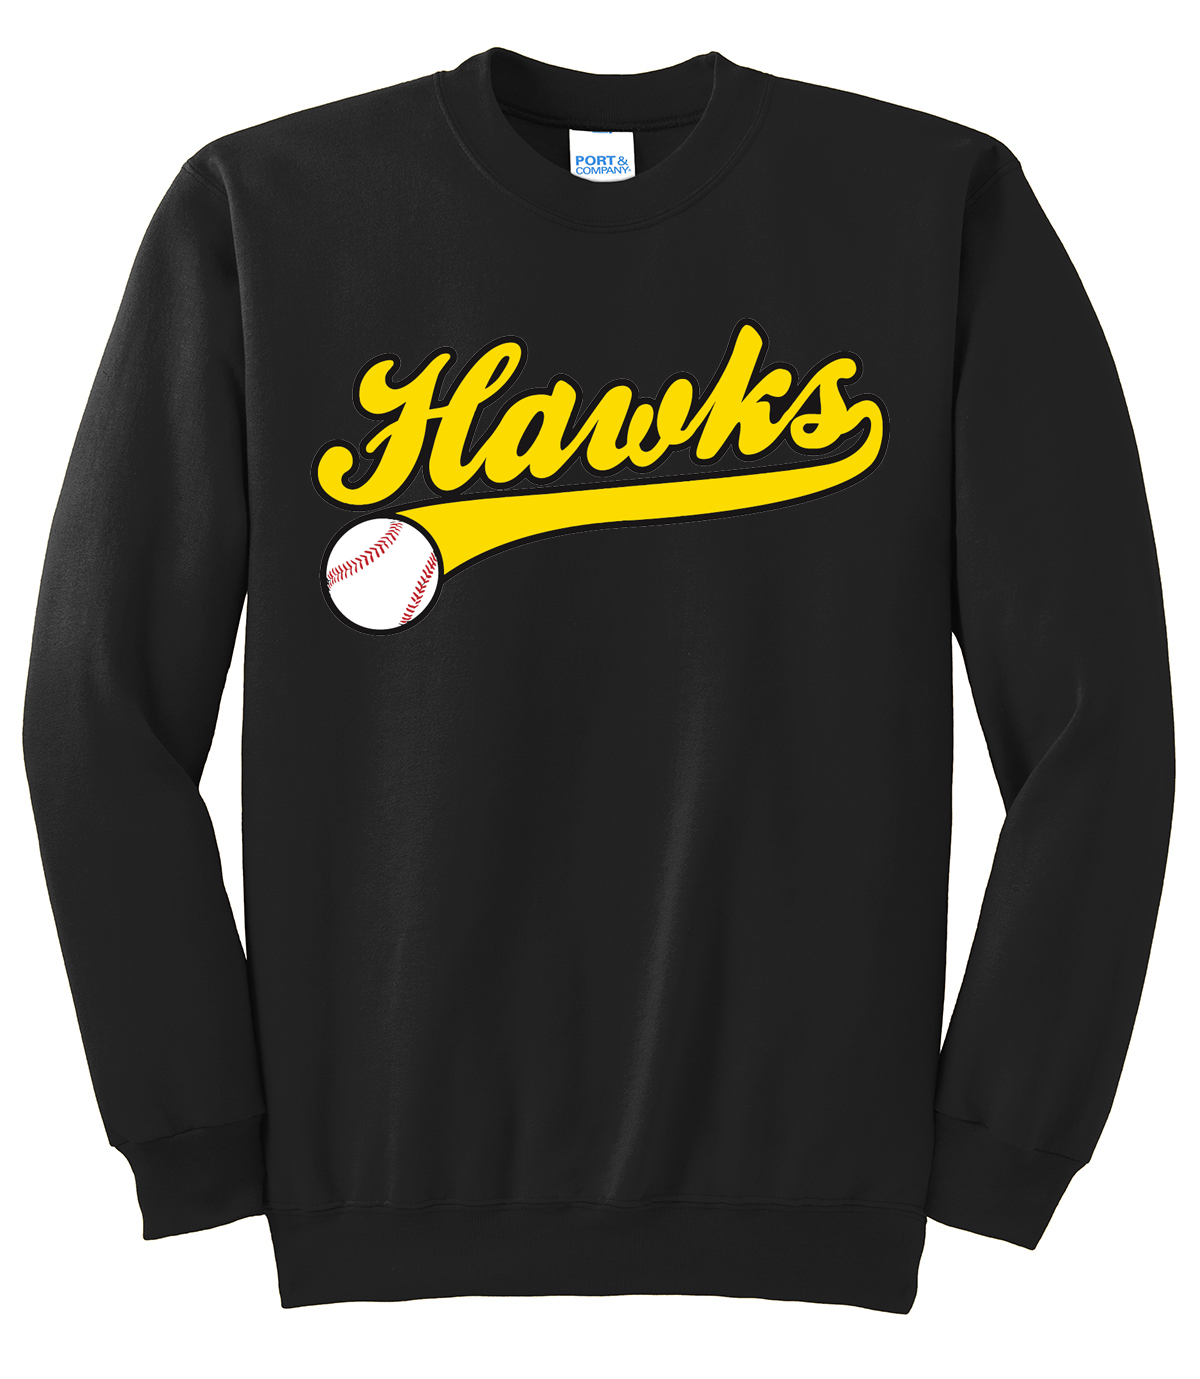 Hawks Baseball Crew Neck Sweater